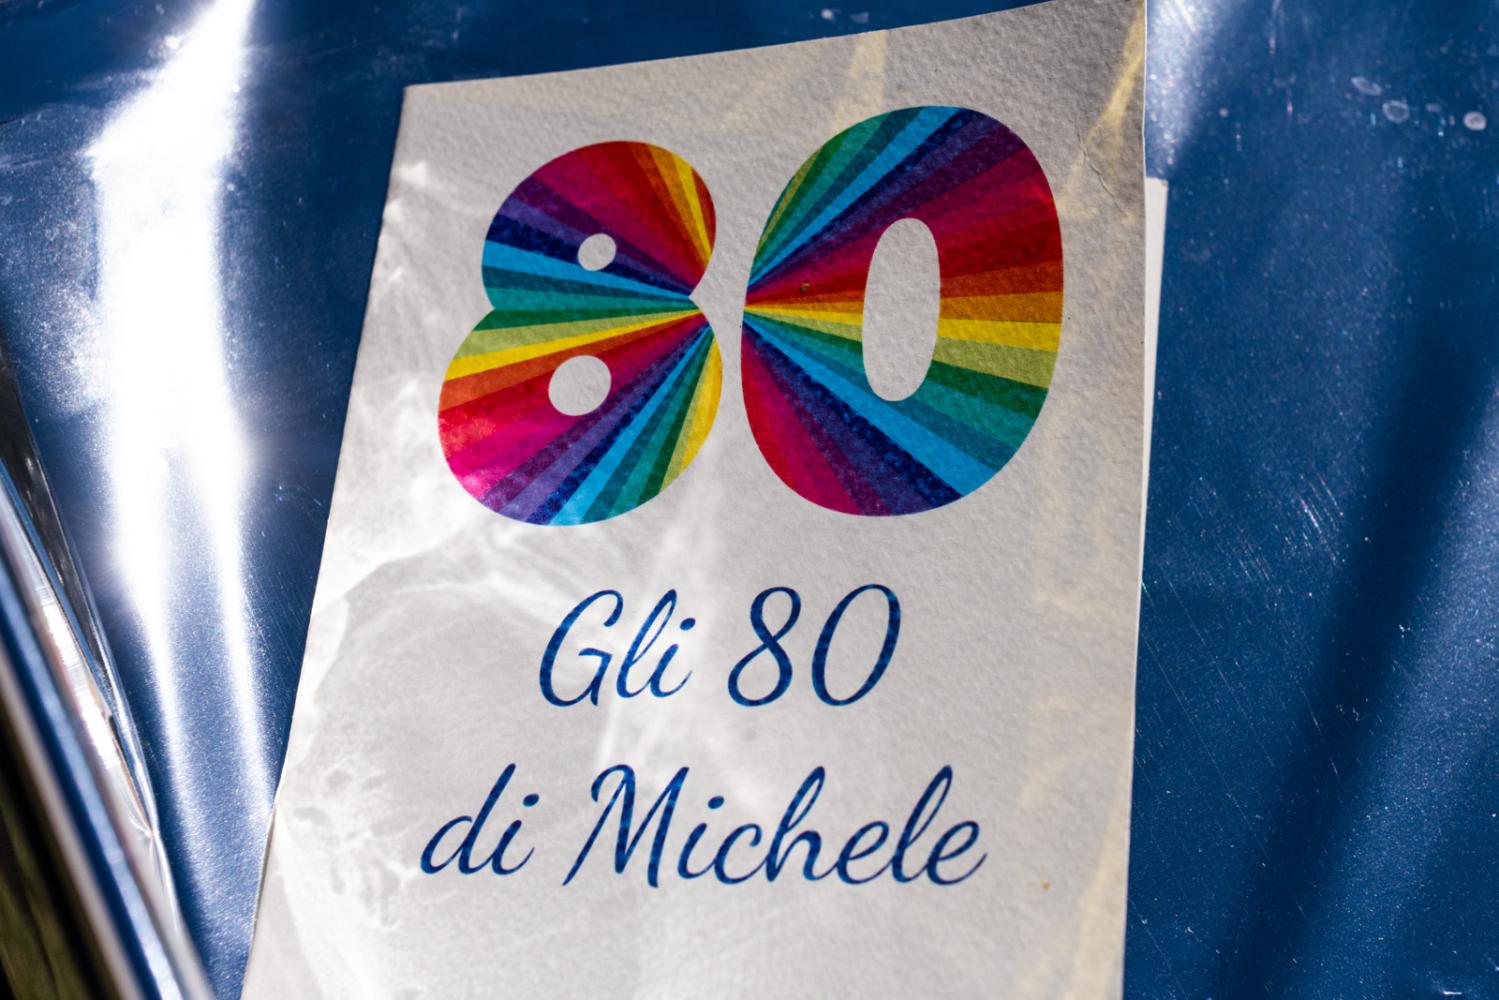 Michele 80